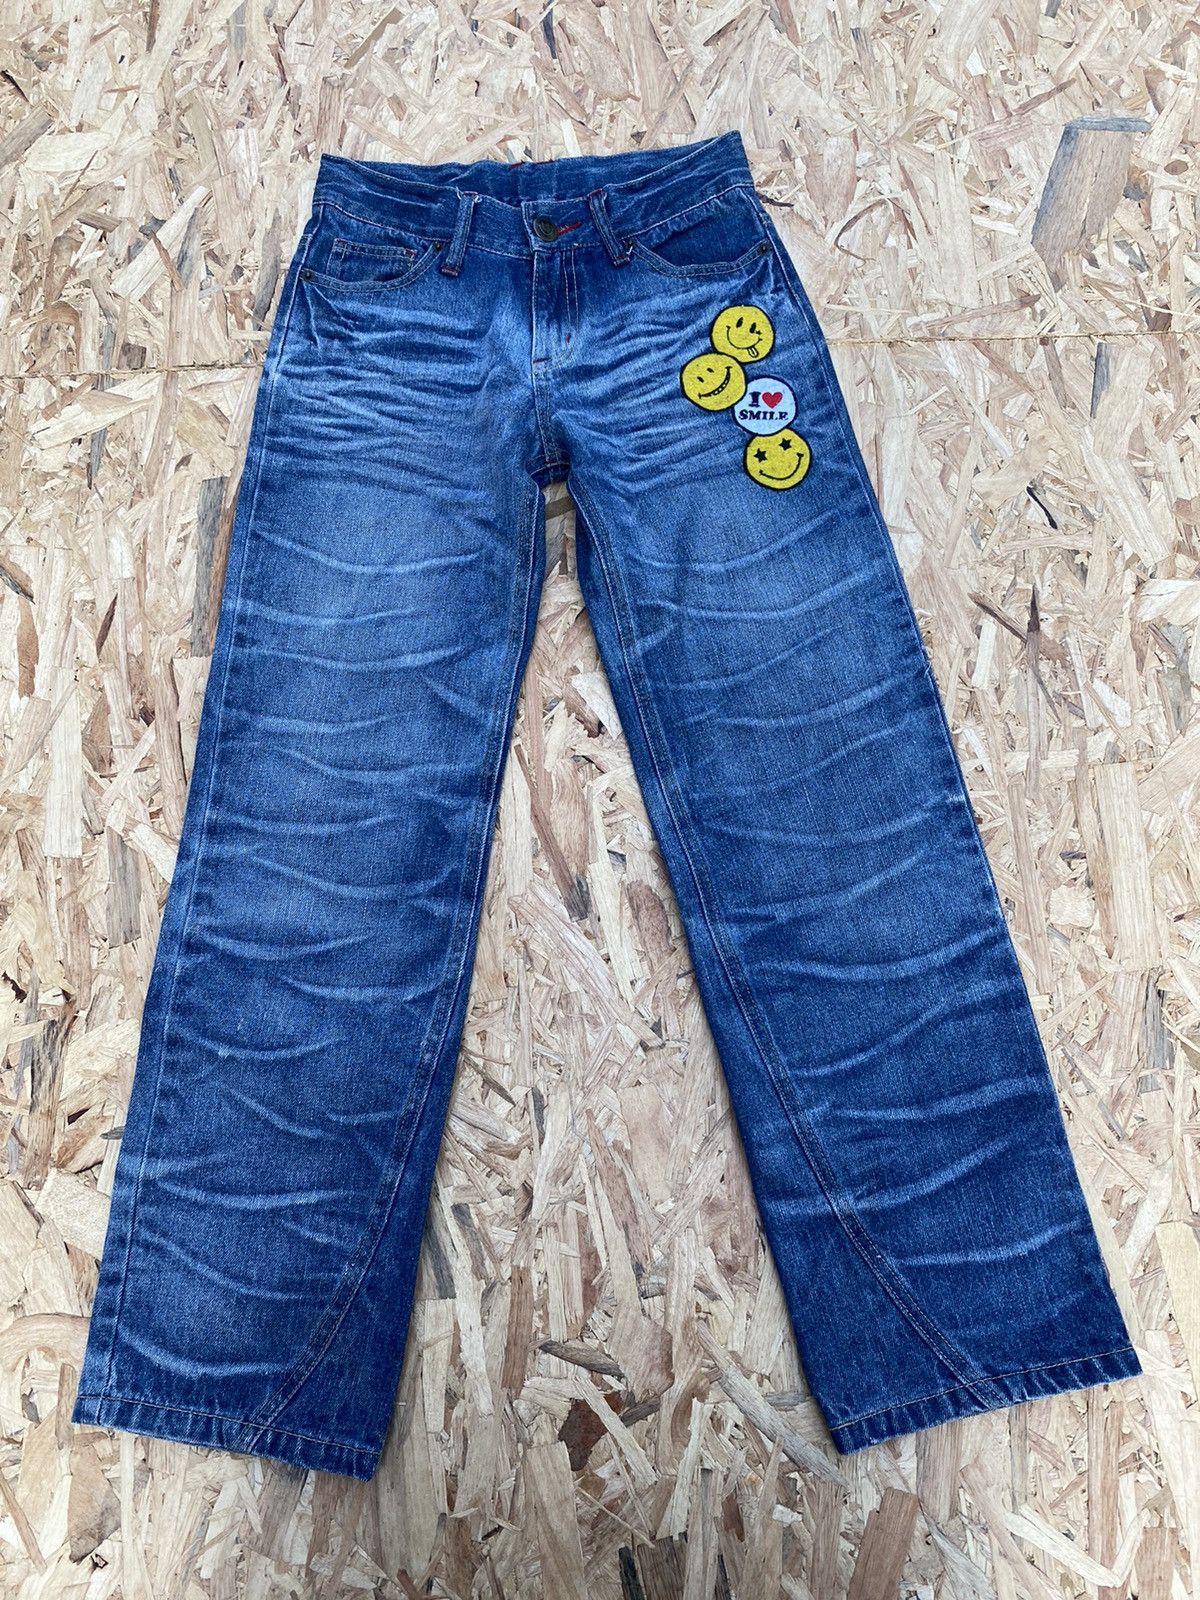 Japanese Brand Smiley Face Jeans Size US 28 / EU 44 - 6 Thumbnail